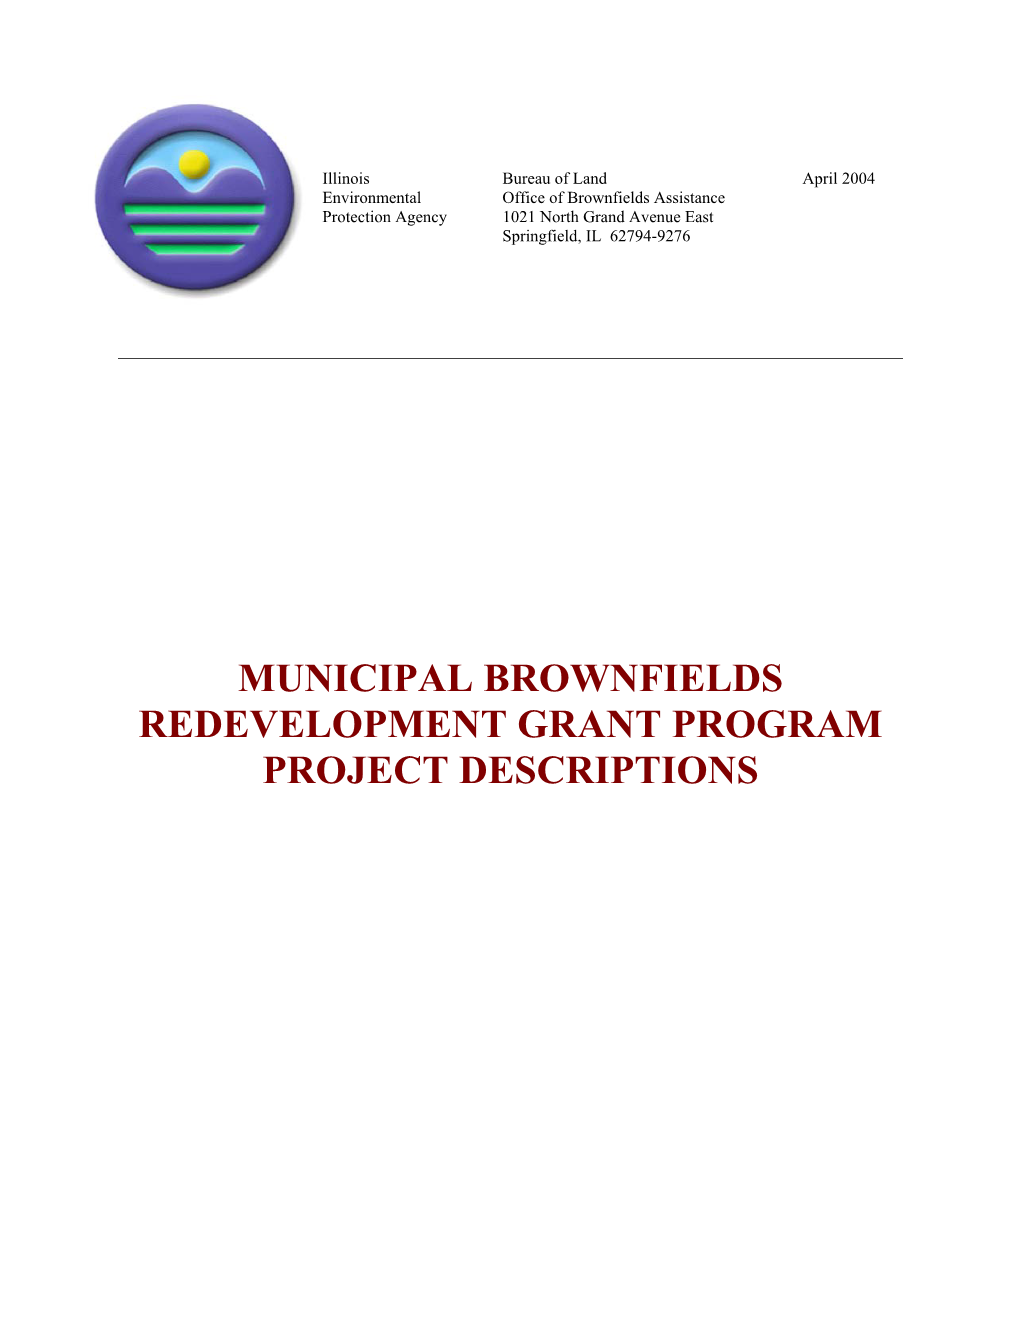 Municipal Brownfields Redevelopment Grant Program Project Descriptions